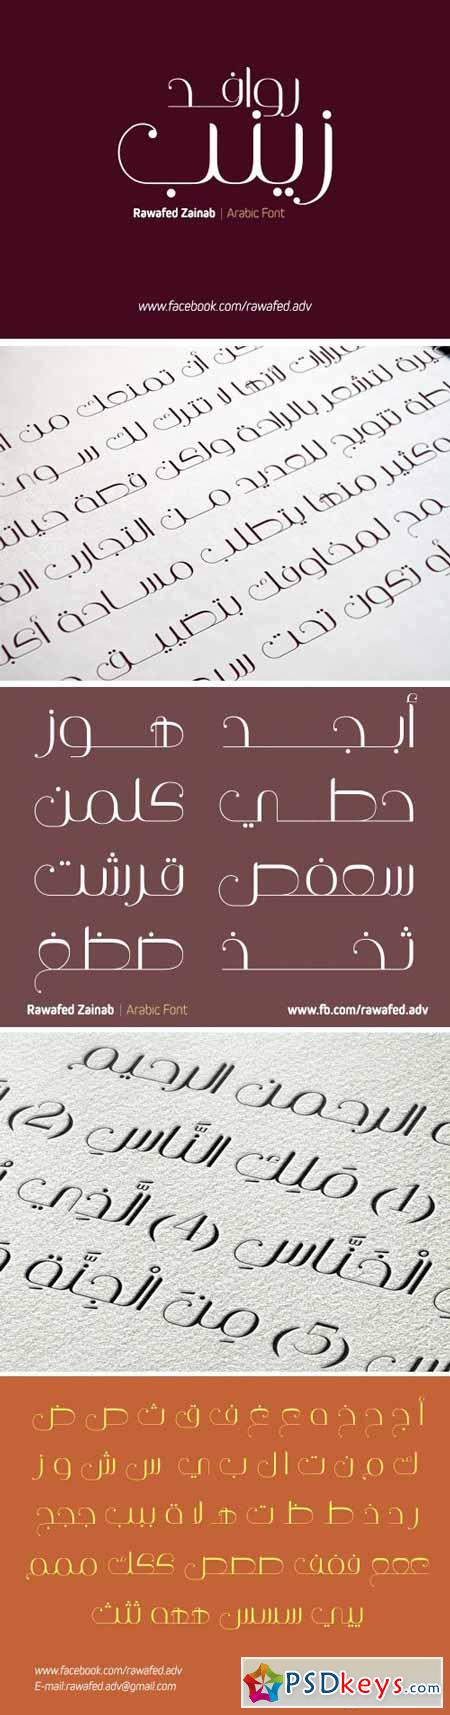 Rawafed Zainab Arabic Font by Tareq Alizzy